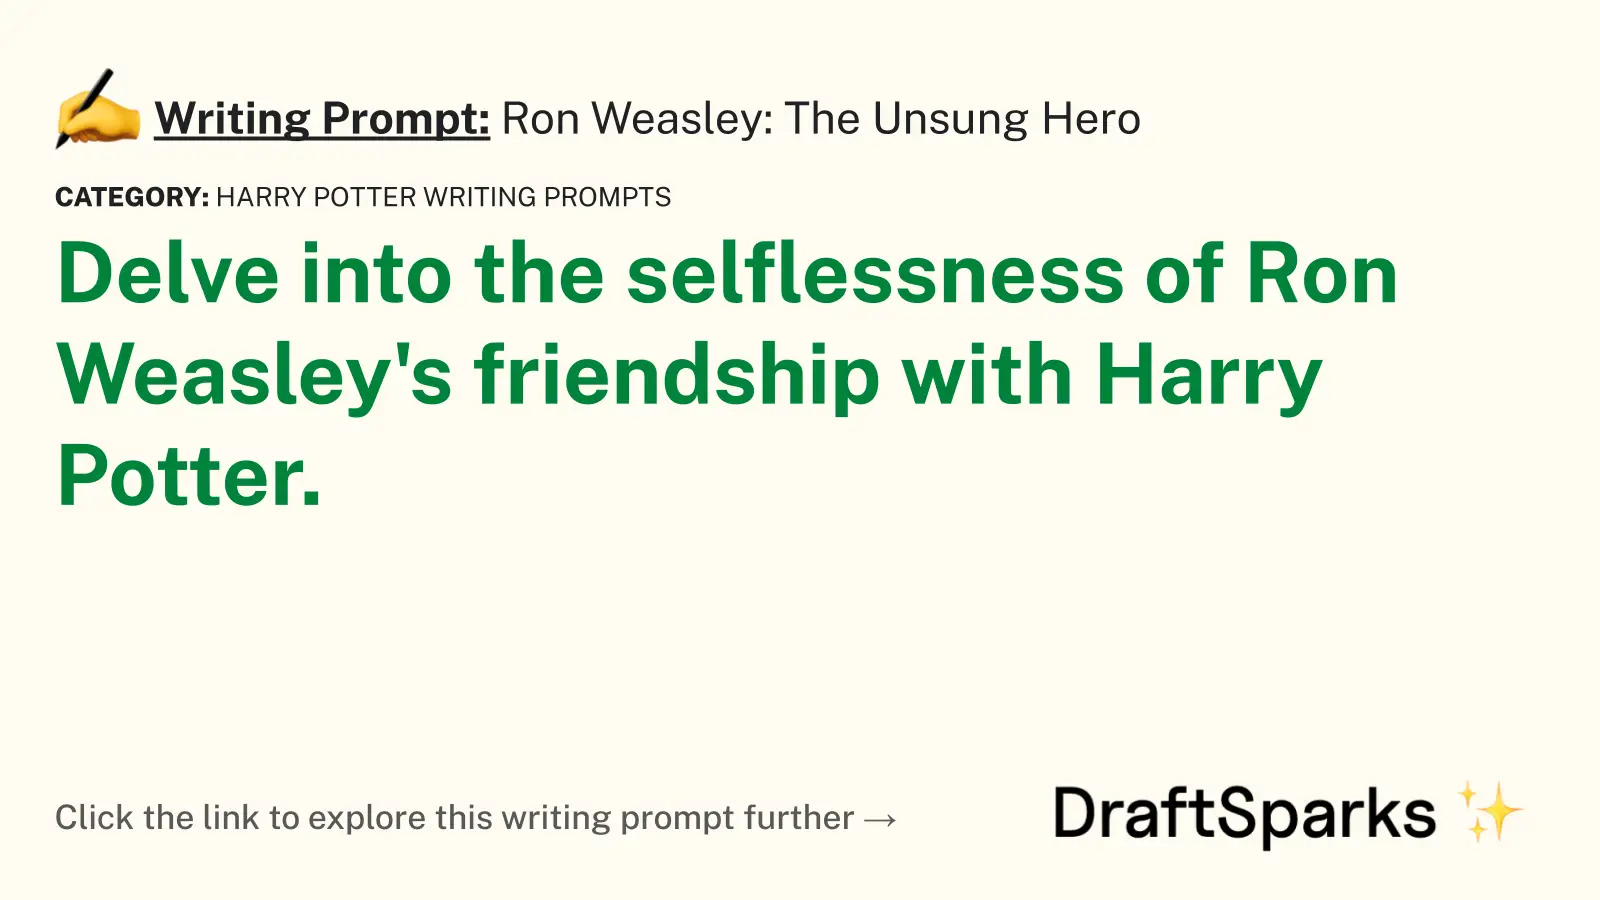 Ron Weasley: The Unsung Hero